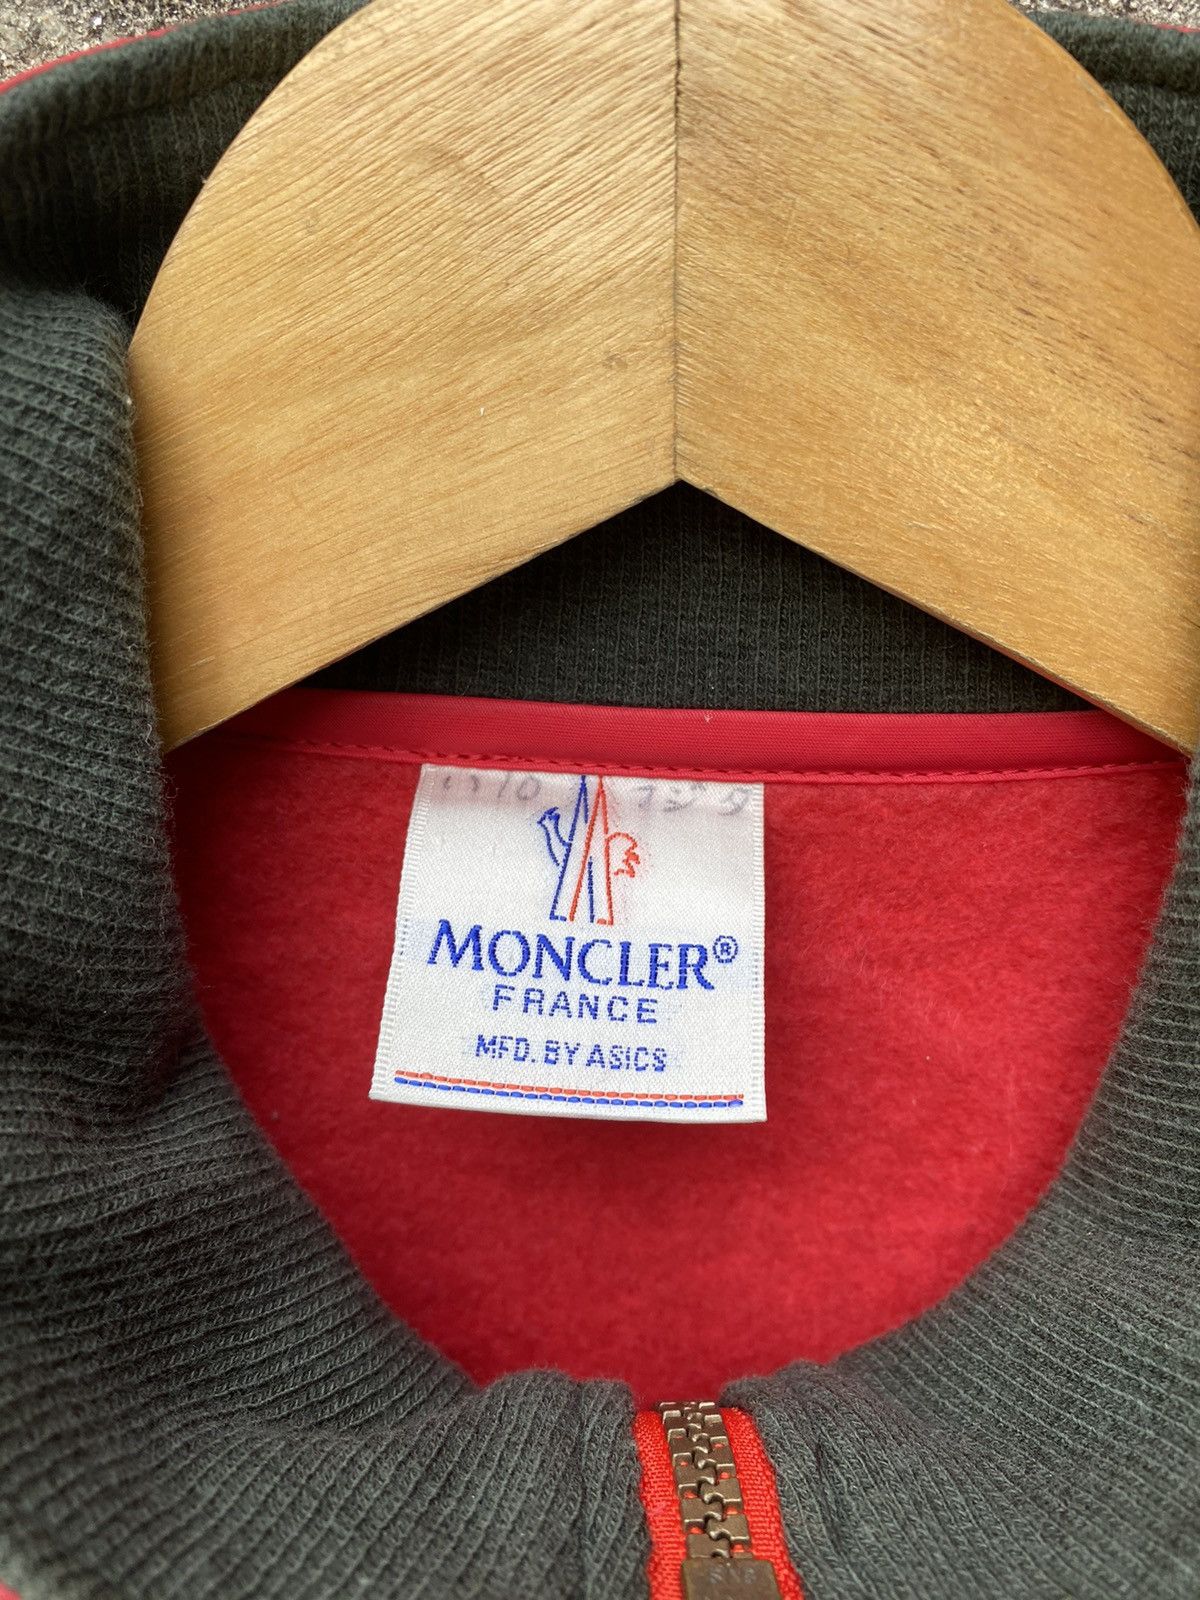 Vintage Moncler France Overalls Jumpsuits By Asics - 9